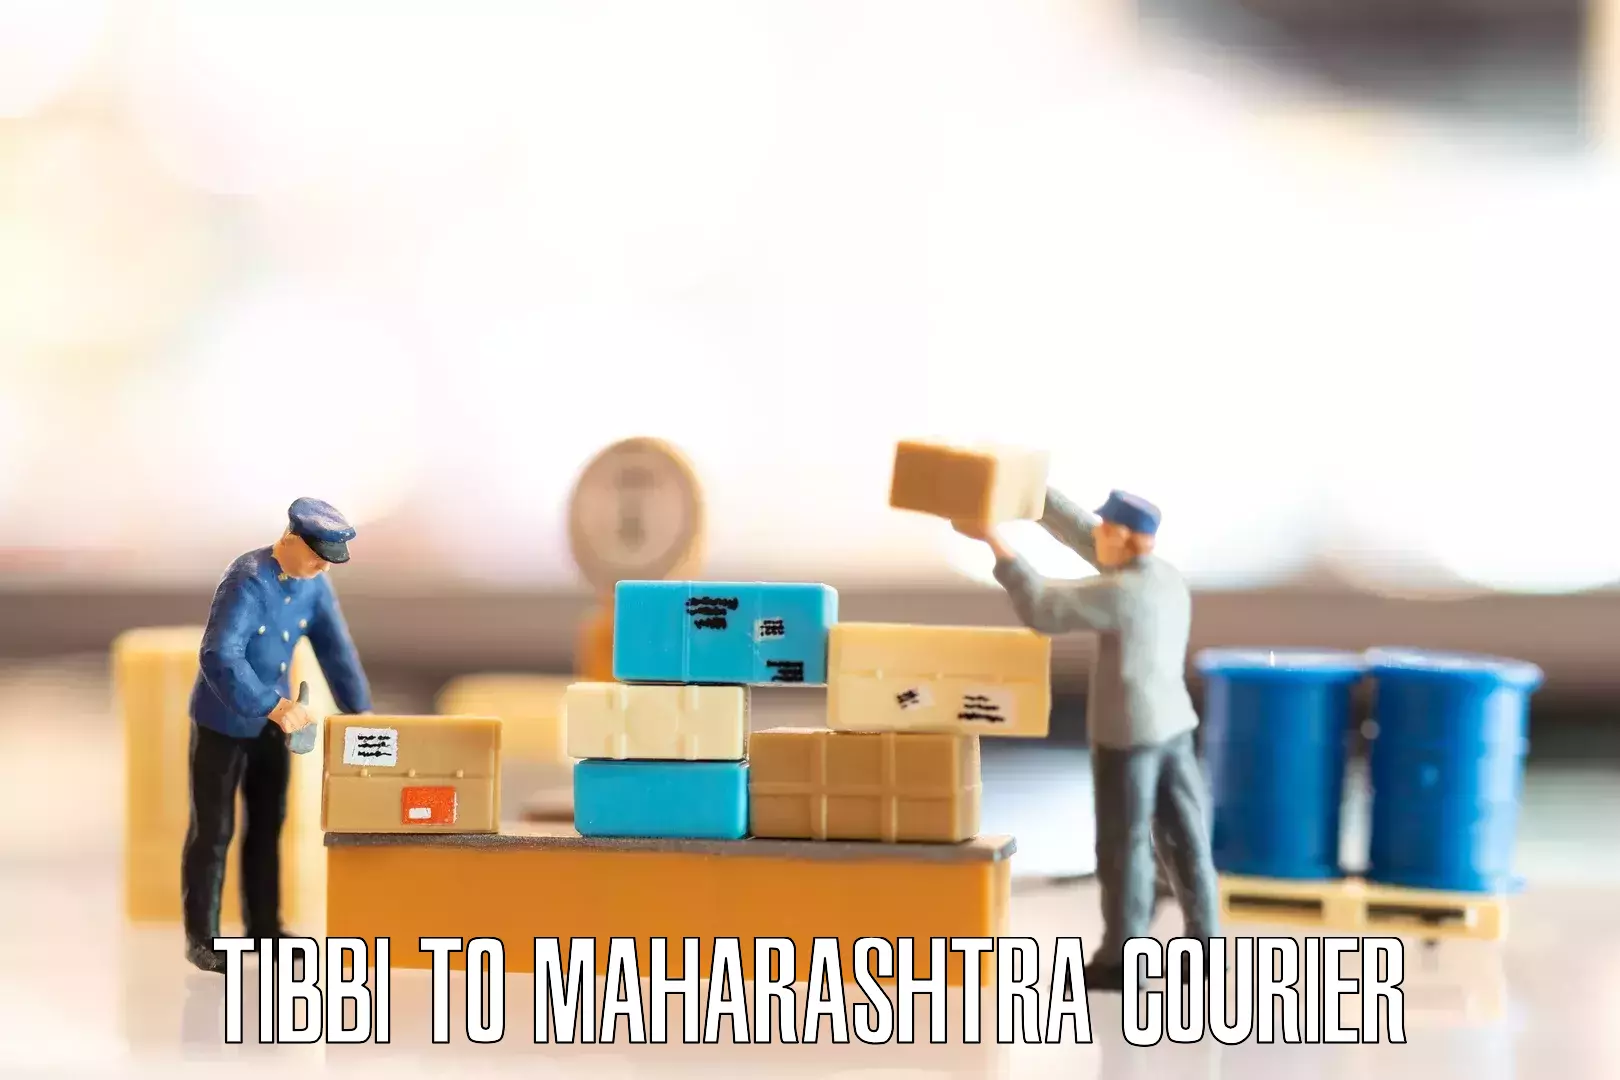 Furniture delivery service Tibbi to Maharashtra